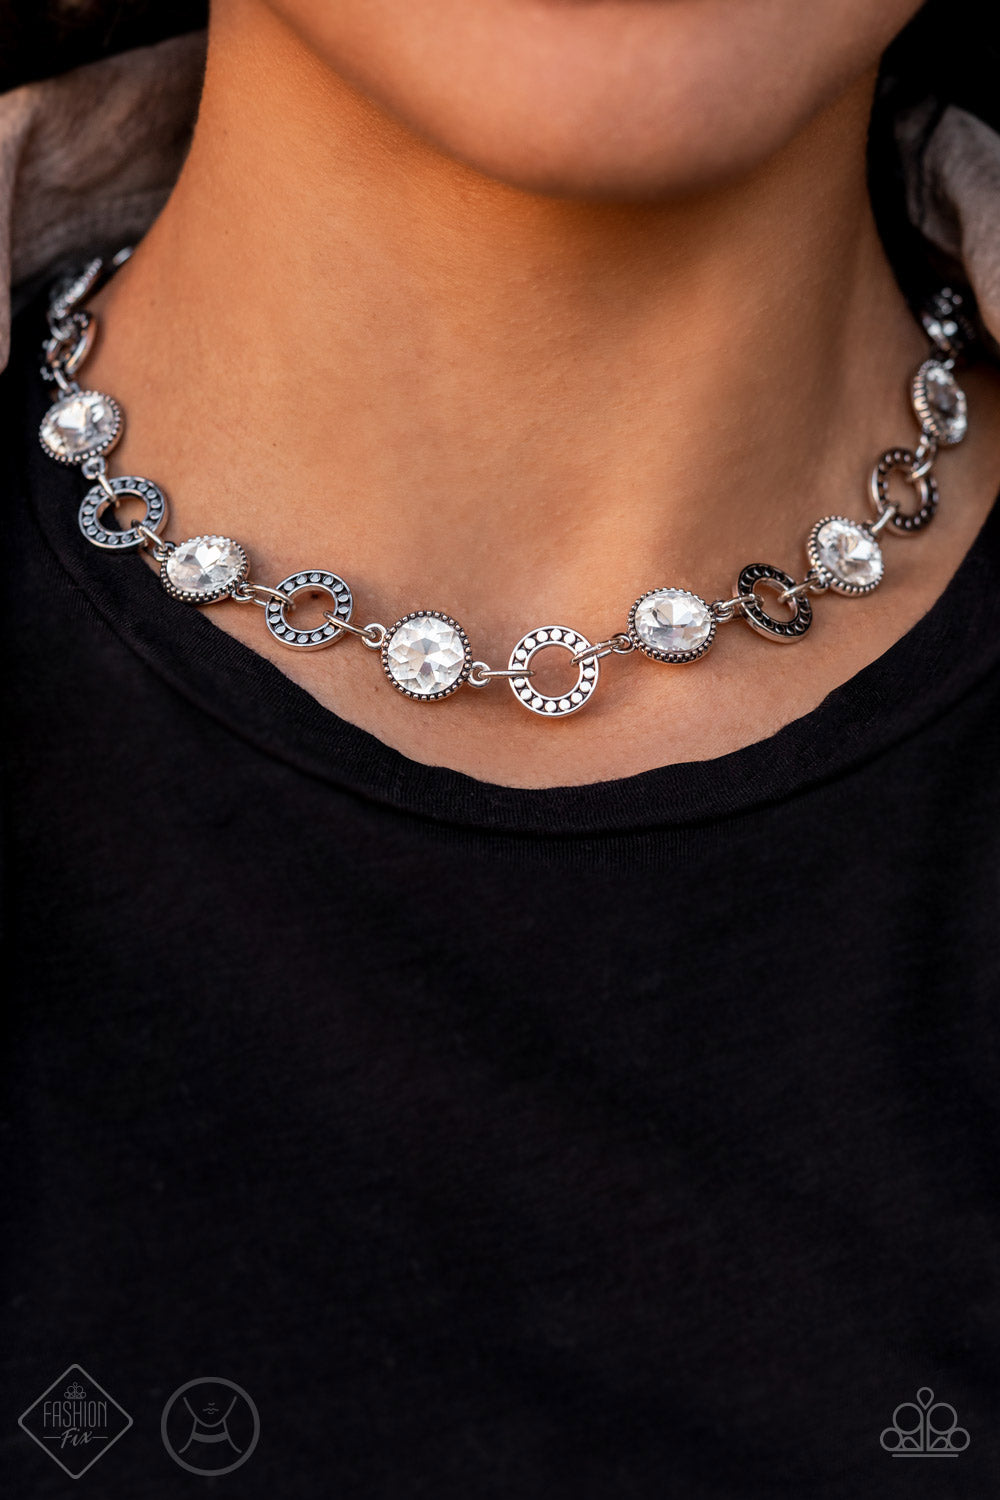 Rhinestone Rollout - White Necklace - Choker - Fashion Fix